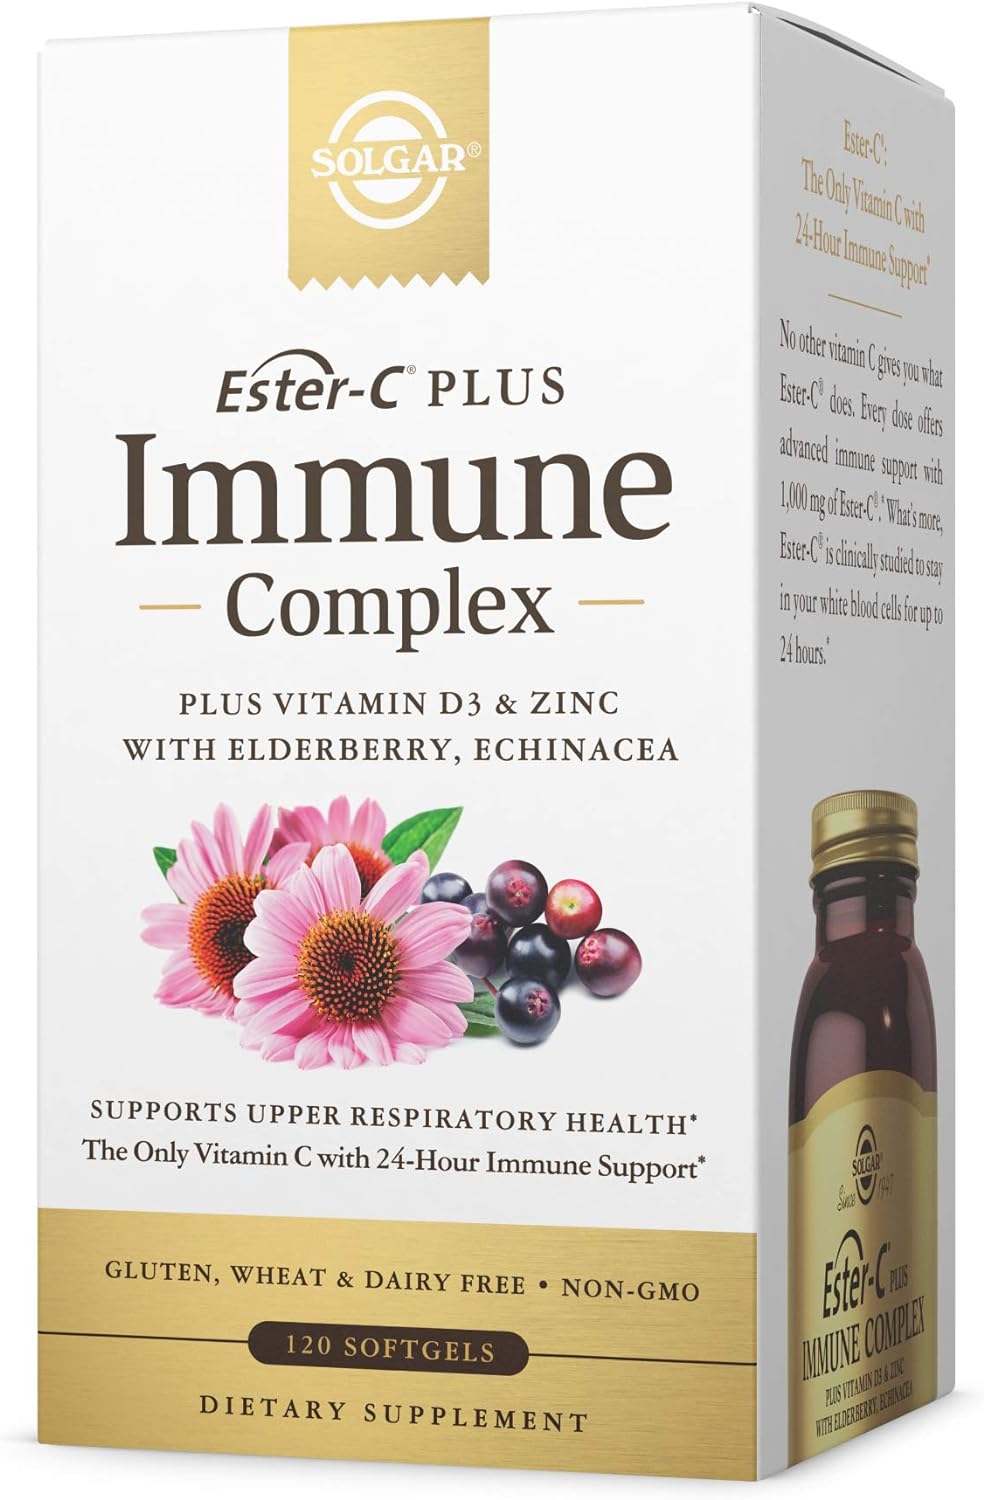 Solgar Ester-C Plus Immune Complex -120 Softgels, 24-Hour Immune Support, Supports Upper Respiratory Health - Plus D3, Zinc, Elderberry & Echinacea - Non-GMO, Gluten Free, Dairy Free - 60 Servings